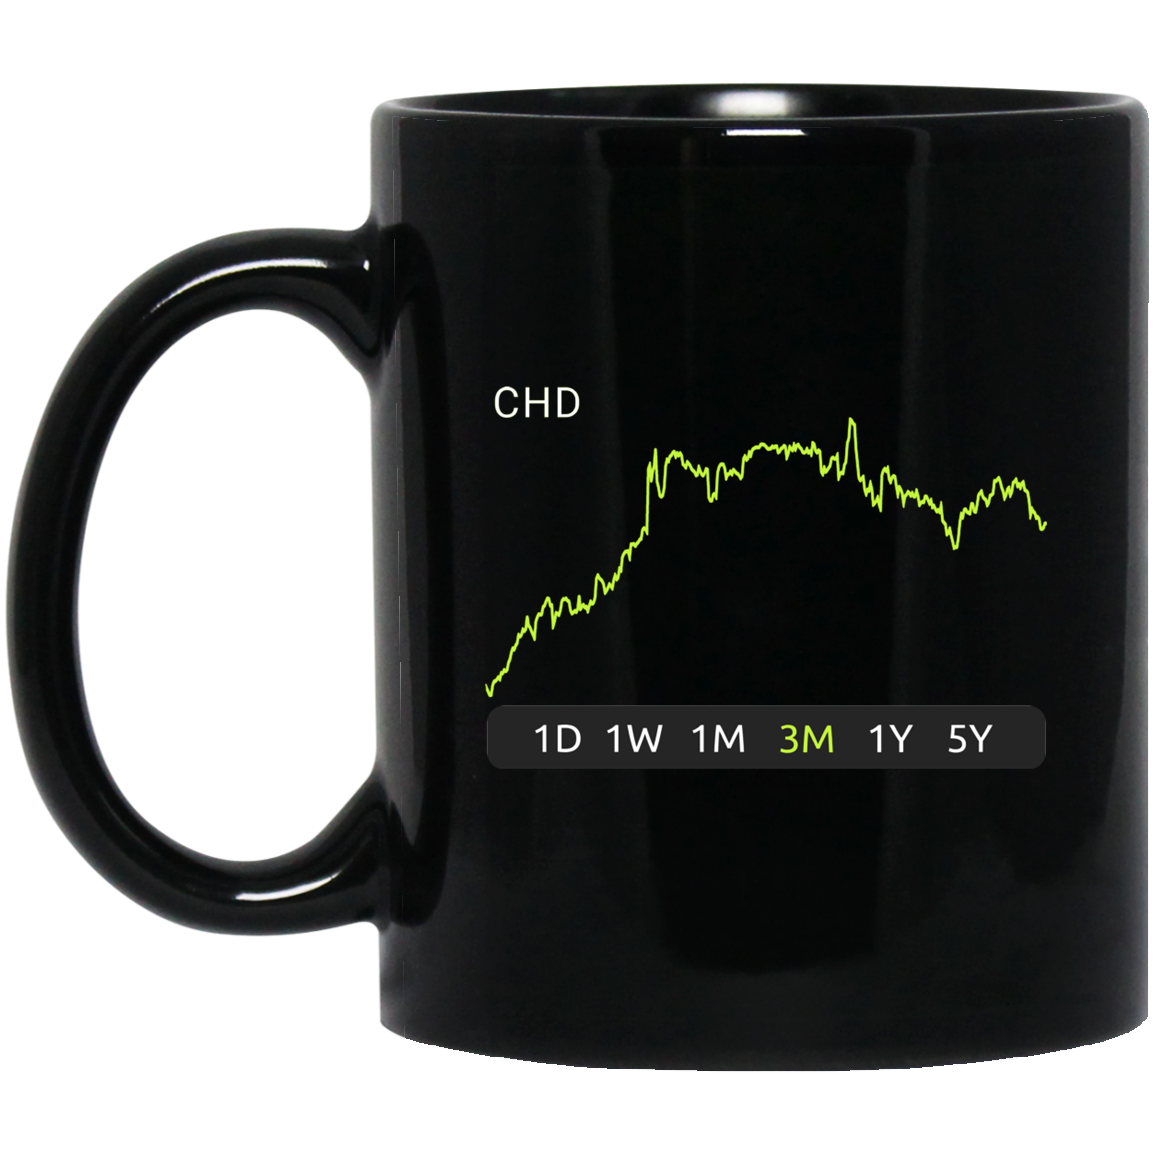 CHD Stock 3m Mug